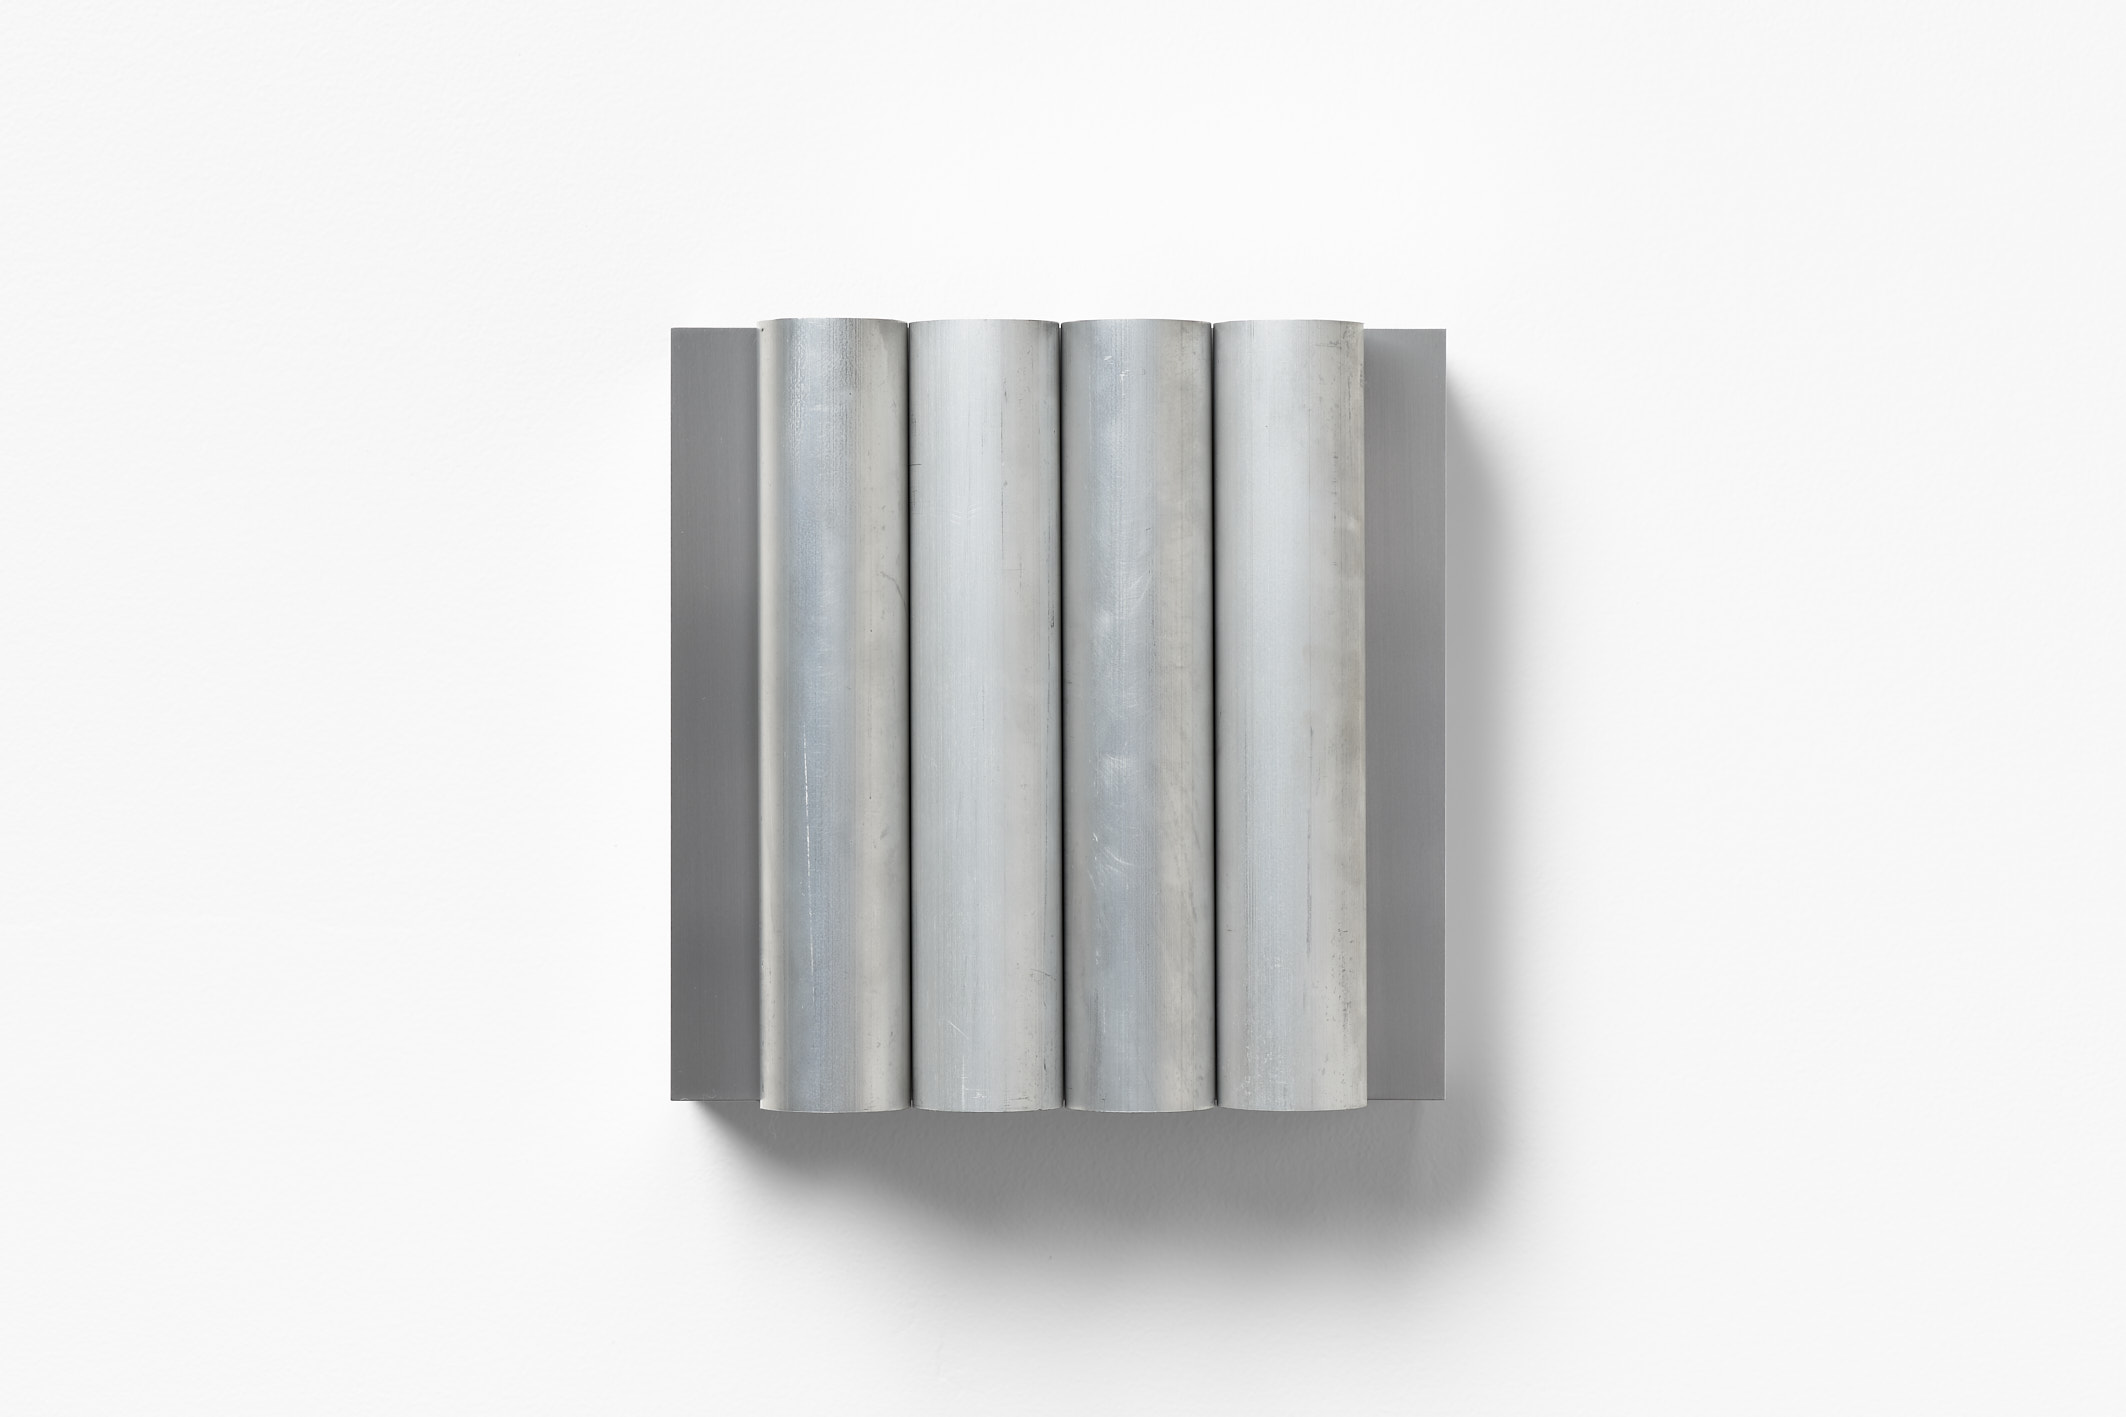 Aluminium wall reliefs - 20 x 20 cm Aluminium works,Group of 9